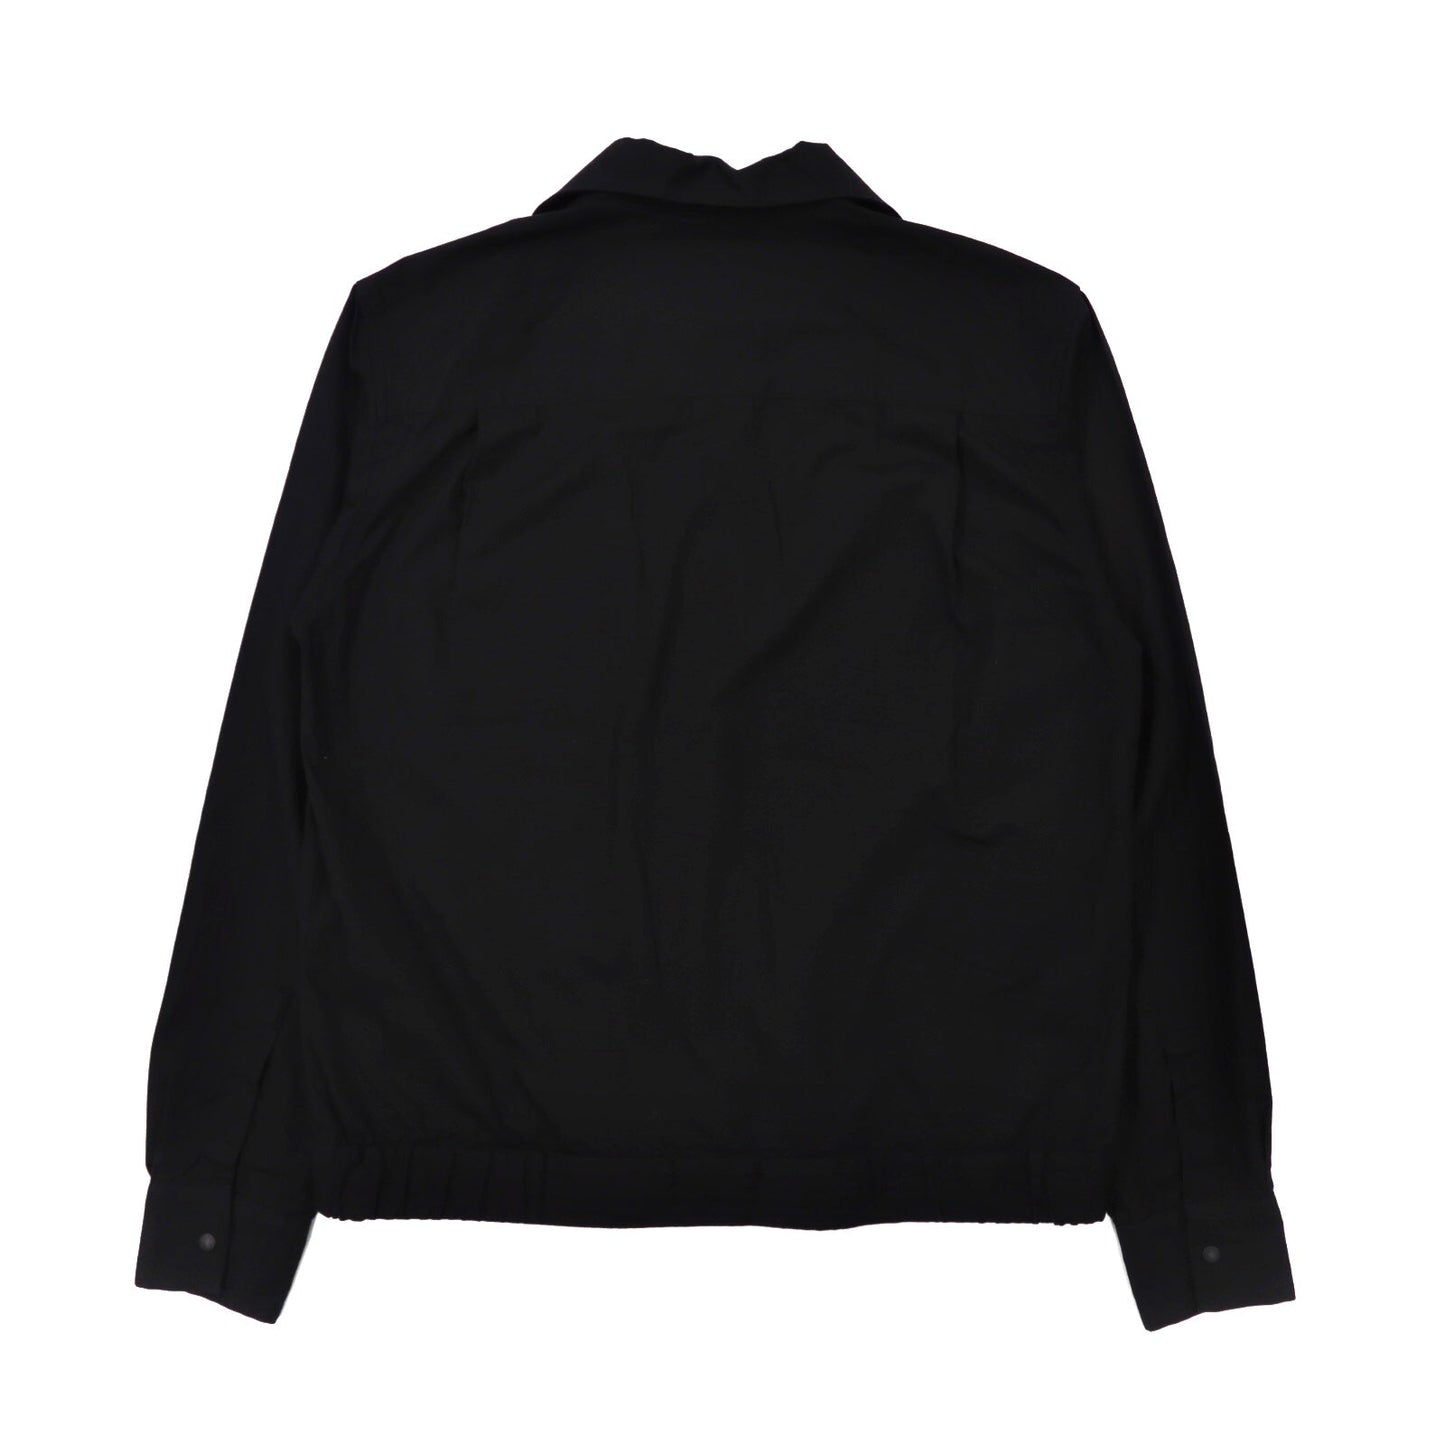 Sasquatchfabrix. オリエンタルオープンカラーシャツ M ブラック コットン 17SS-SY9-008